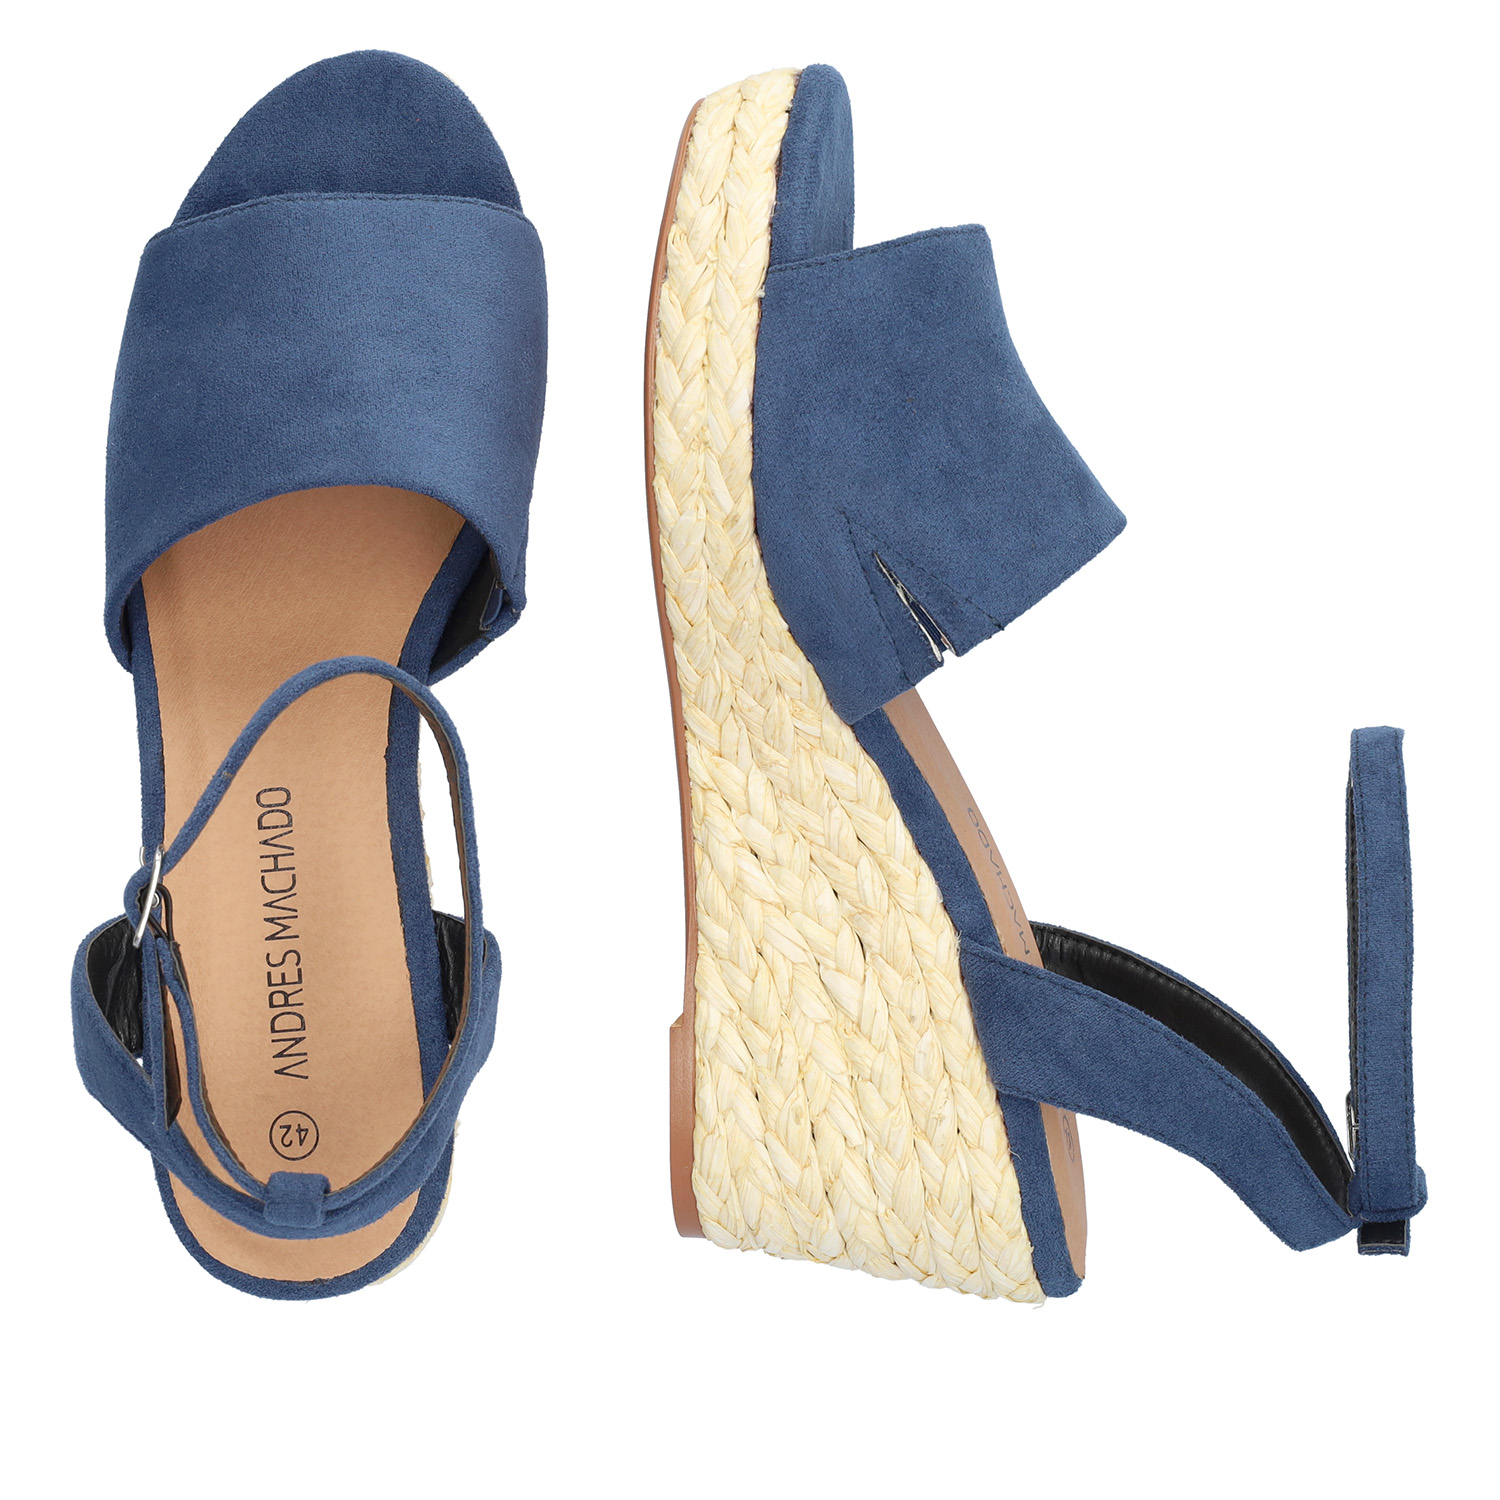 Sandale in Blau aus Wildlederimitat mit Jute-Keil 